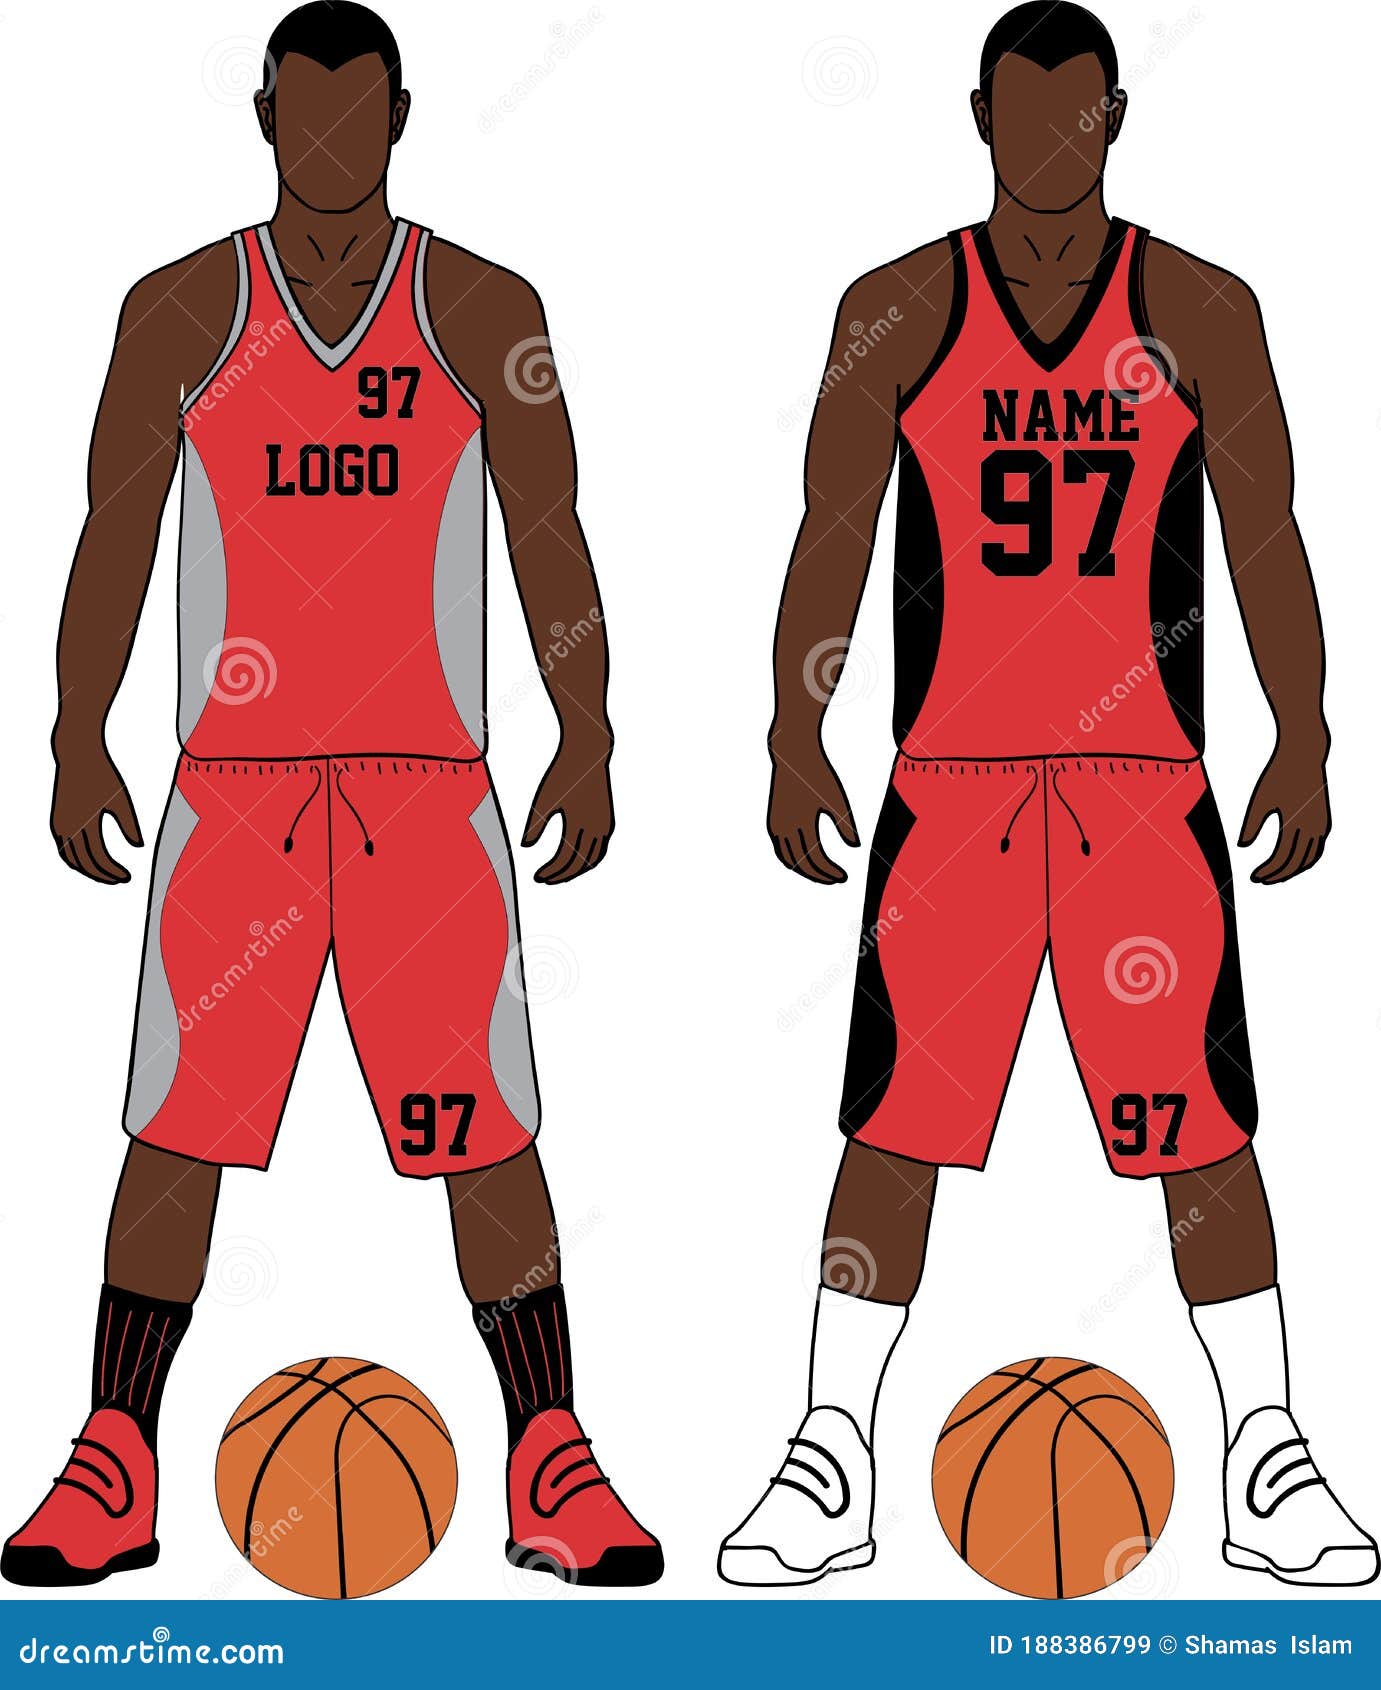 Basketball Hoodie T-shirt Design Uniform Set of Kit. Custom Design  Basketball Jersey Template Stock Vector - Illustration of illustrations,  fashion: 188340683